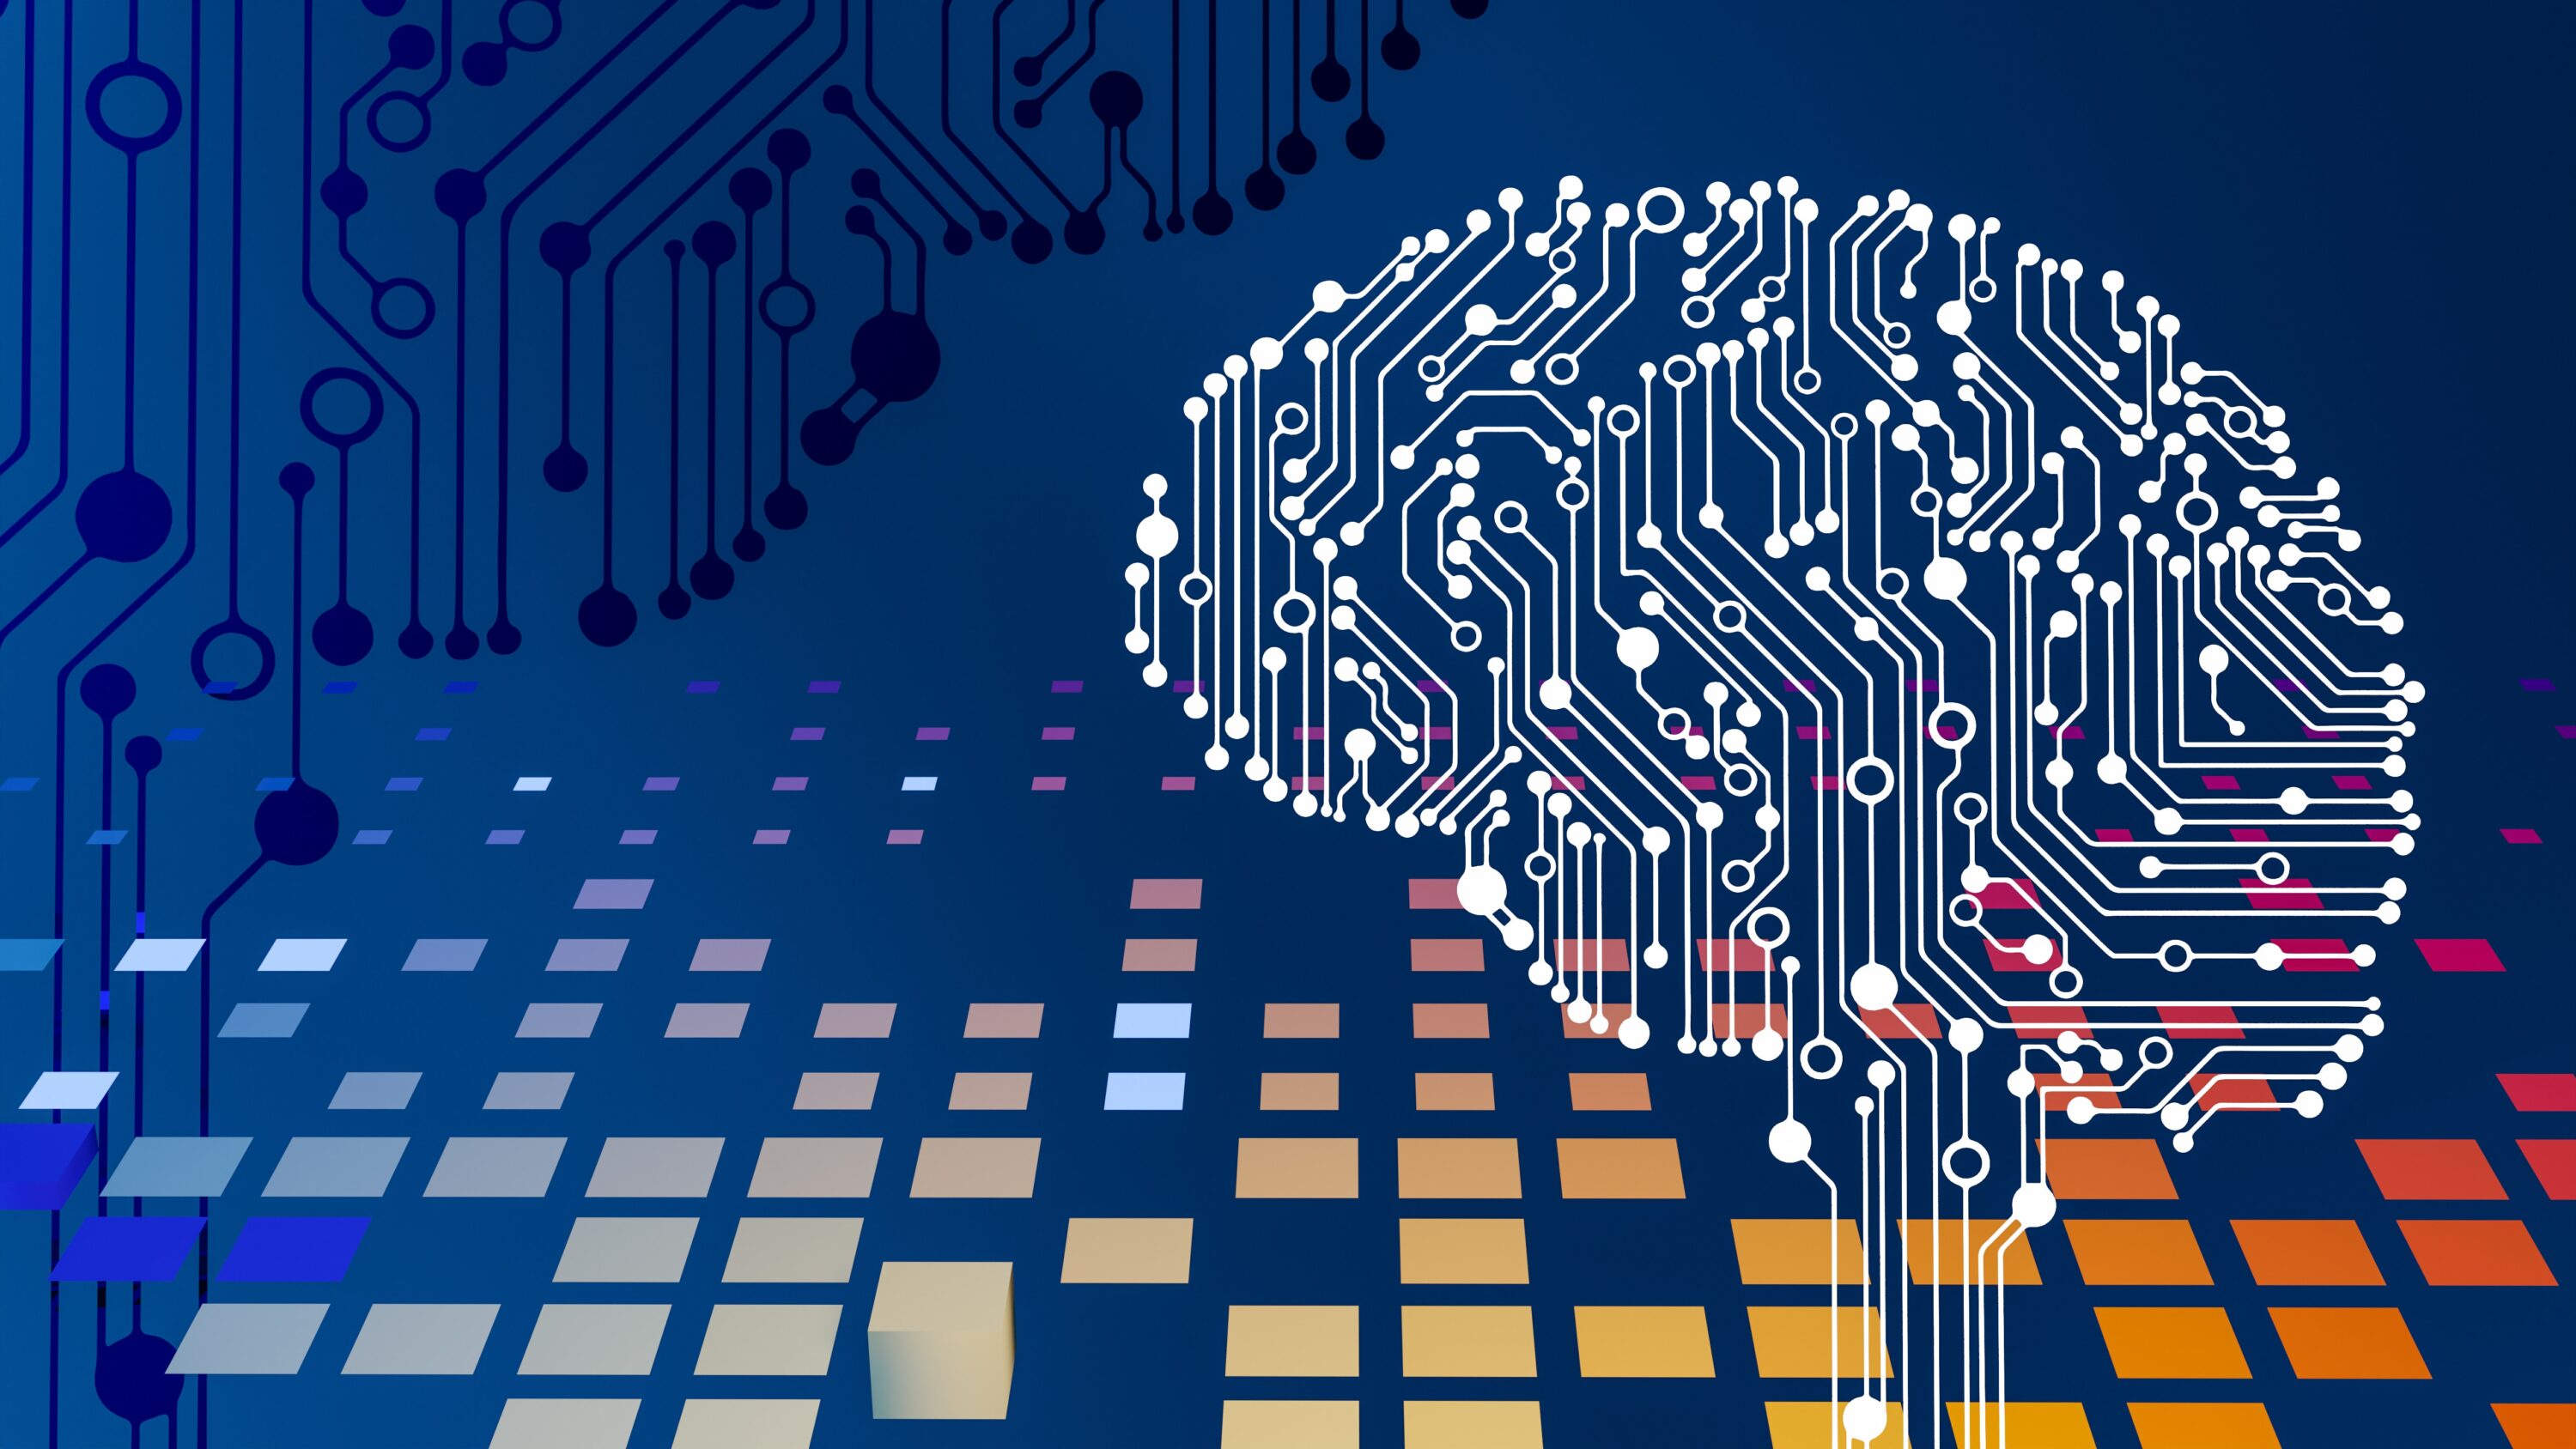 Bank of America believes AI to enhance productivity despite bringing risks